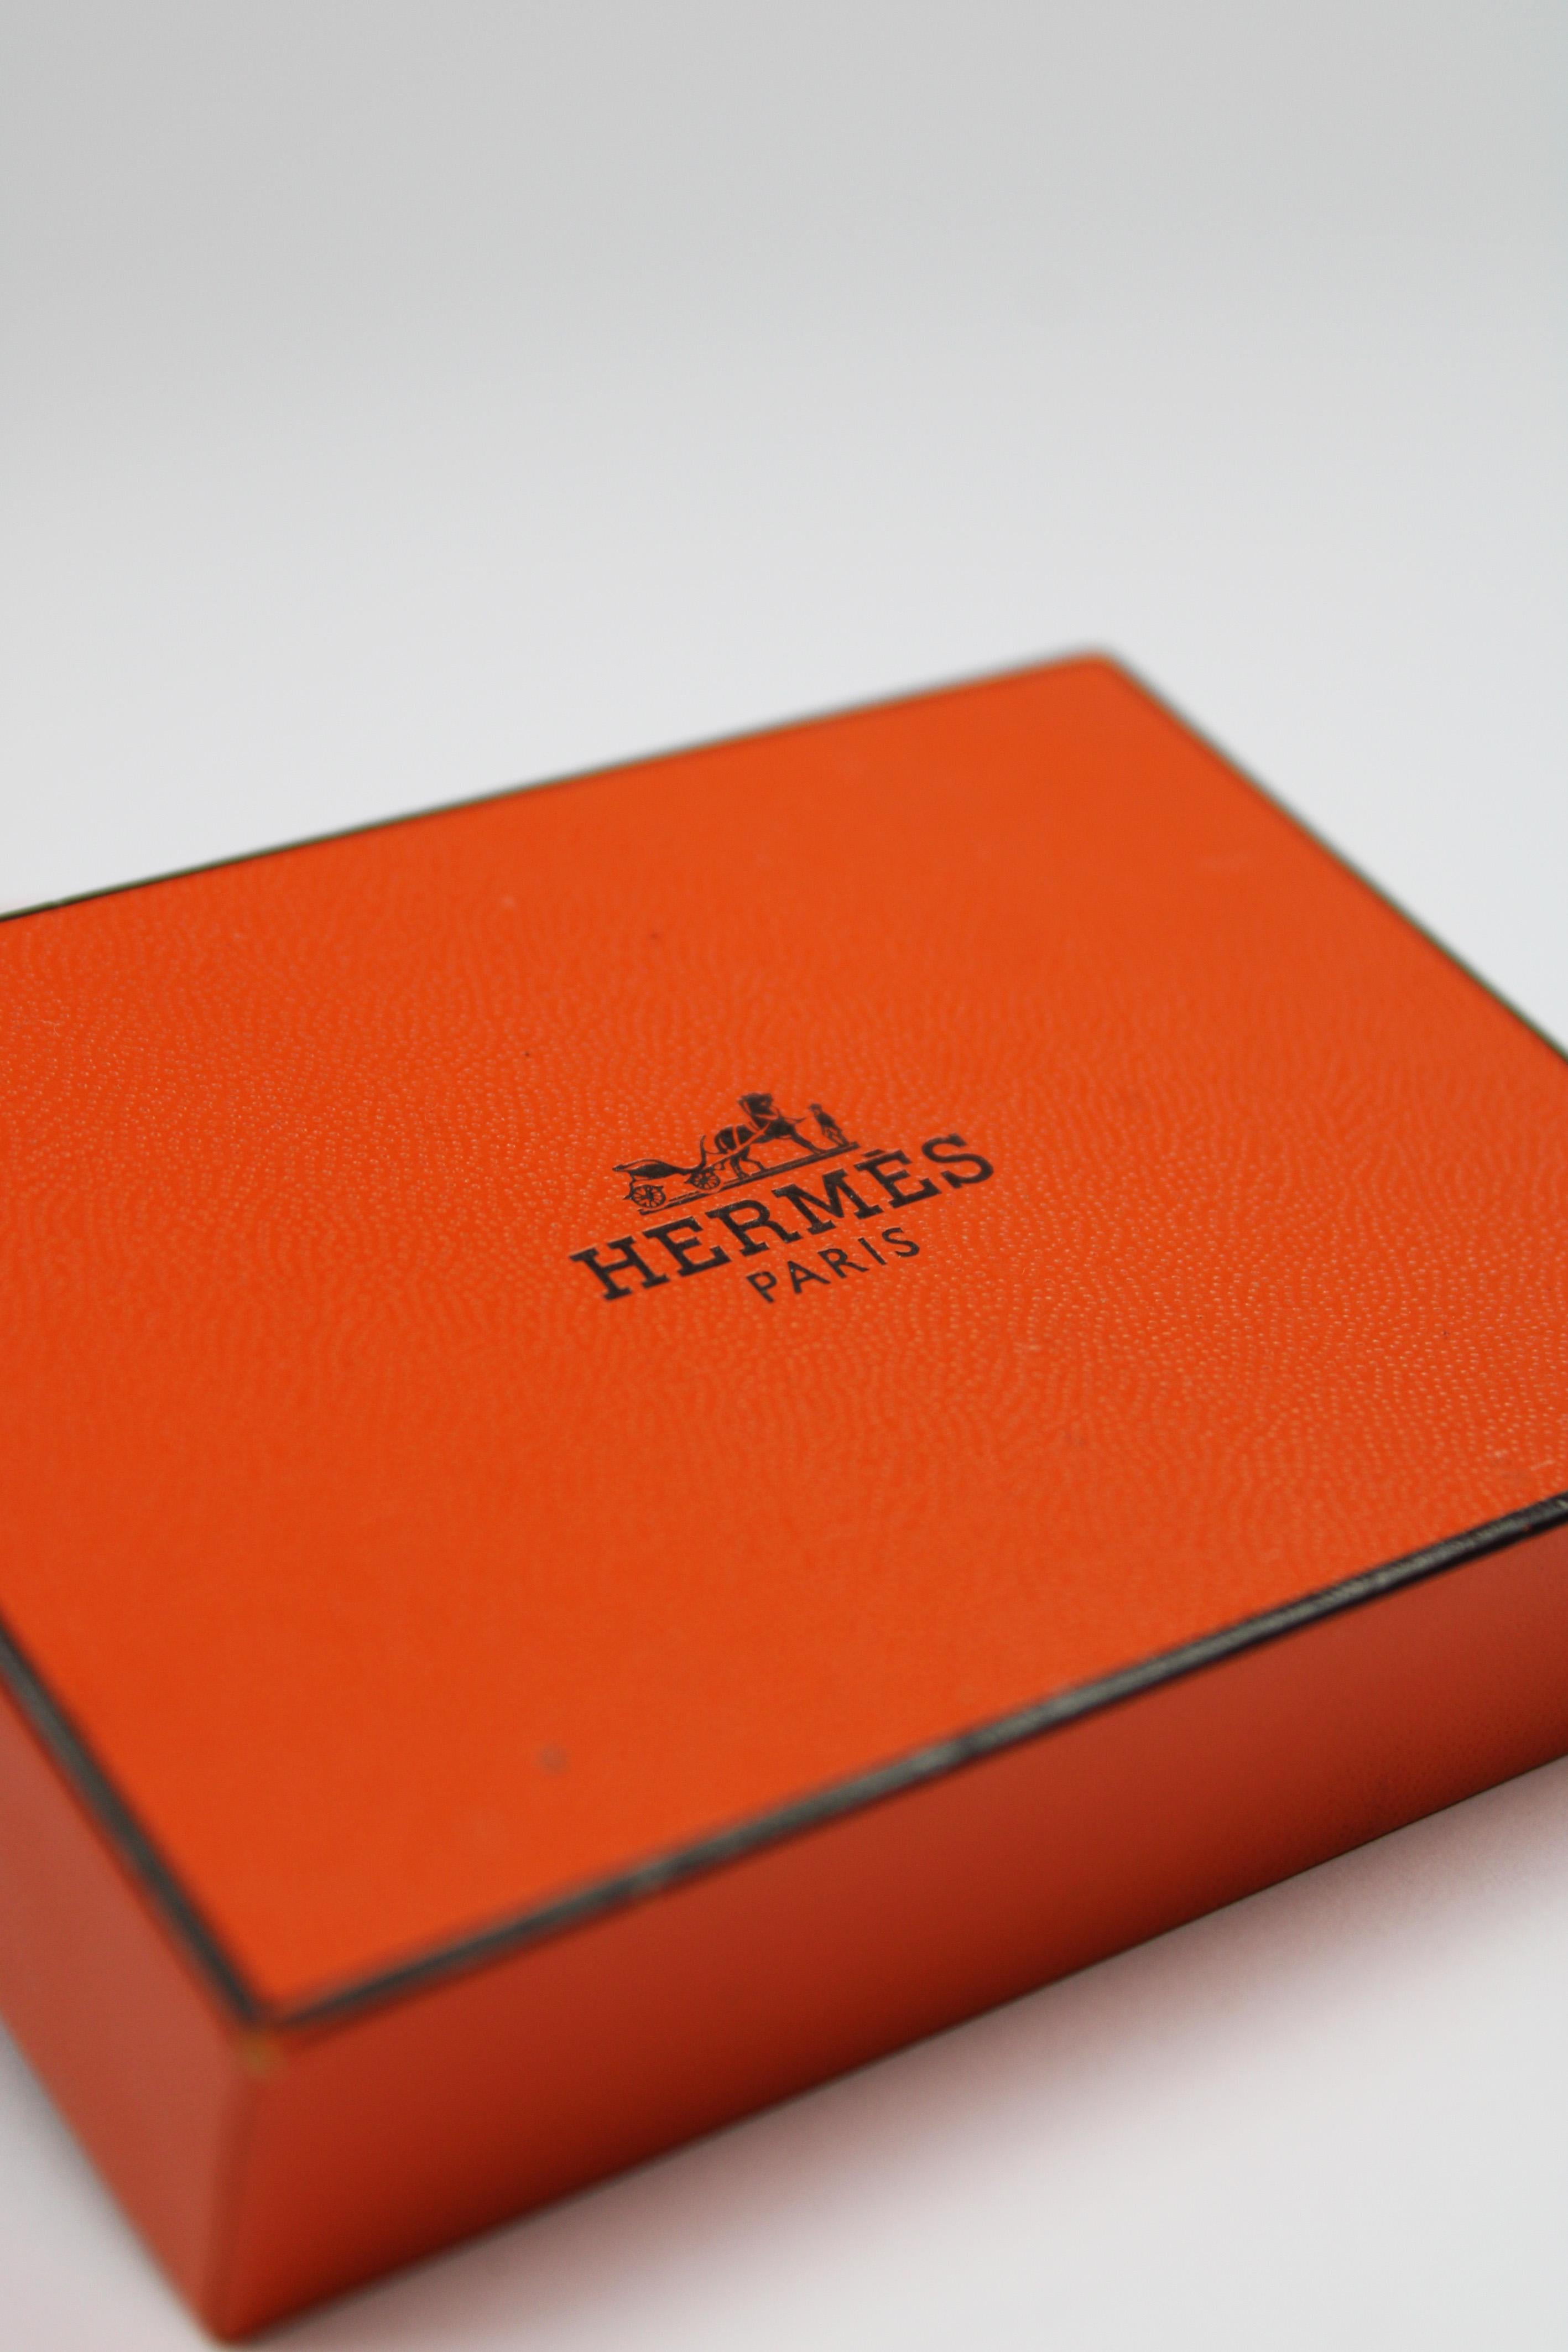 Hermès Sterling Silver Stirrup Cufflinks Box Paris France 21th Century For Sale 4